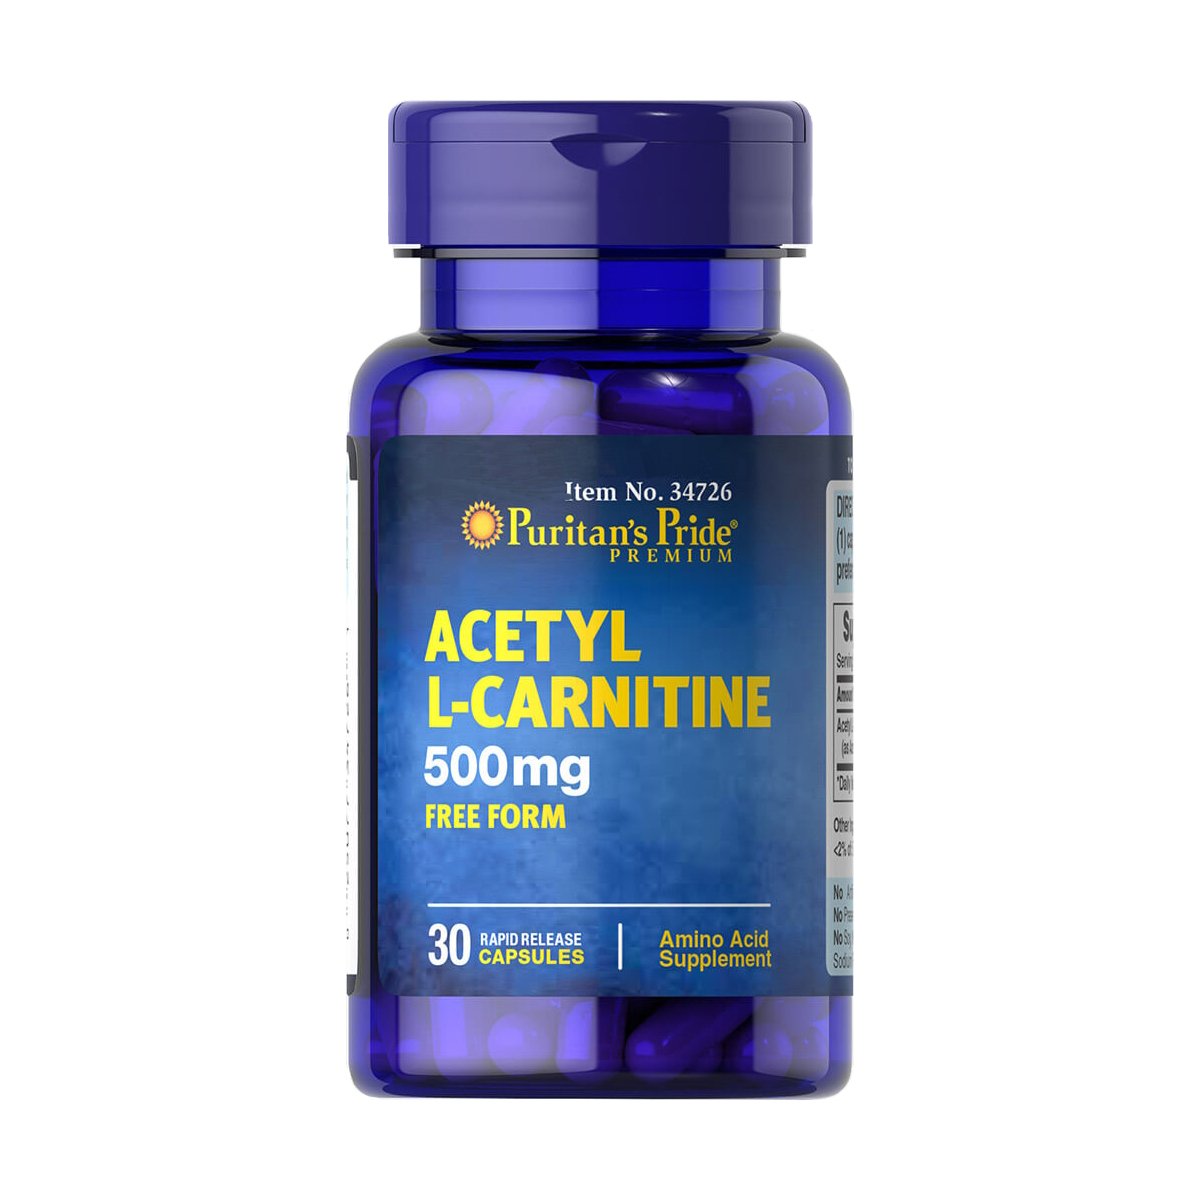 Жиросжигатель Puritan's Pride Acetyl L-Carnitine 500 mg, 30 капсул,  ml, Puritan's Pride. Fat Burner. Weight Loss Fat burning 